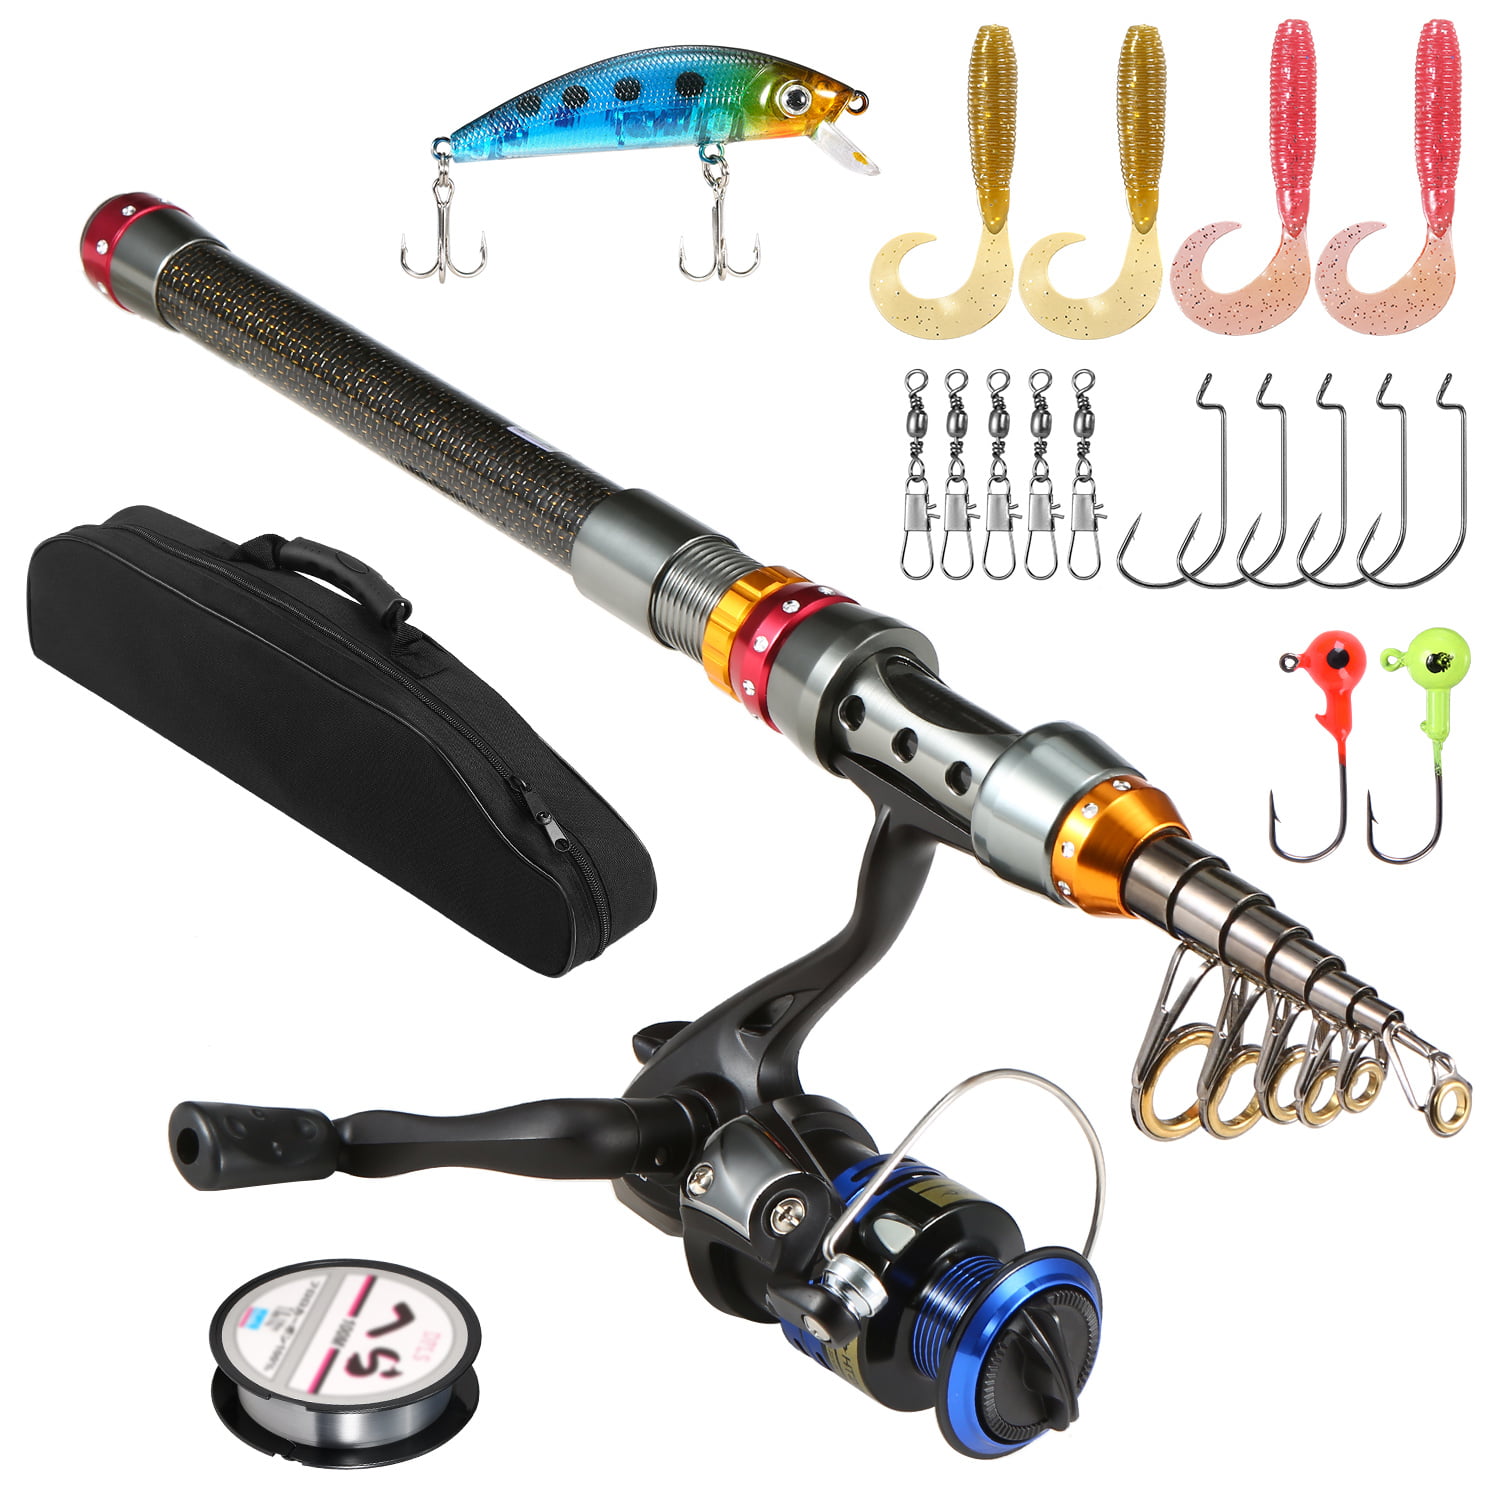 Details about   Telescopic Fishing Rod Reel Set & Lures Hooks & Travel Storage Bag Full Kit D9G7 